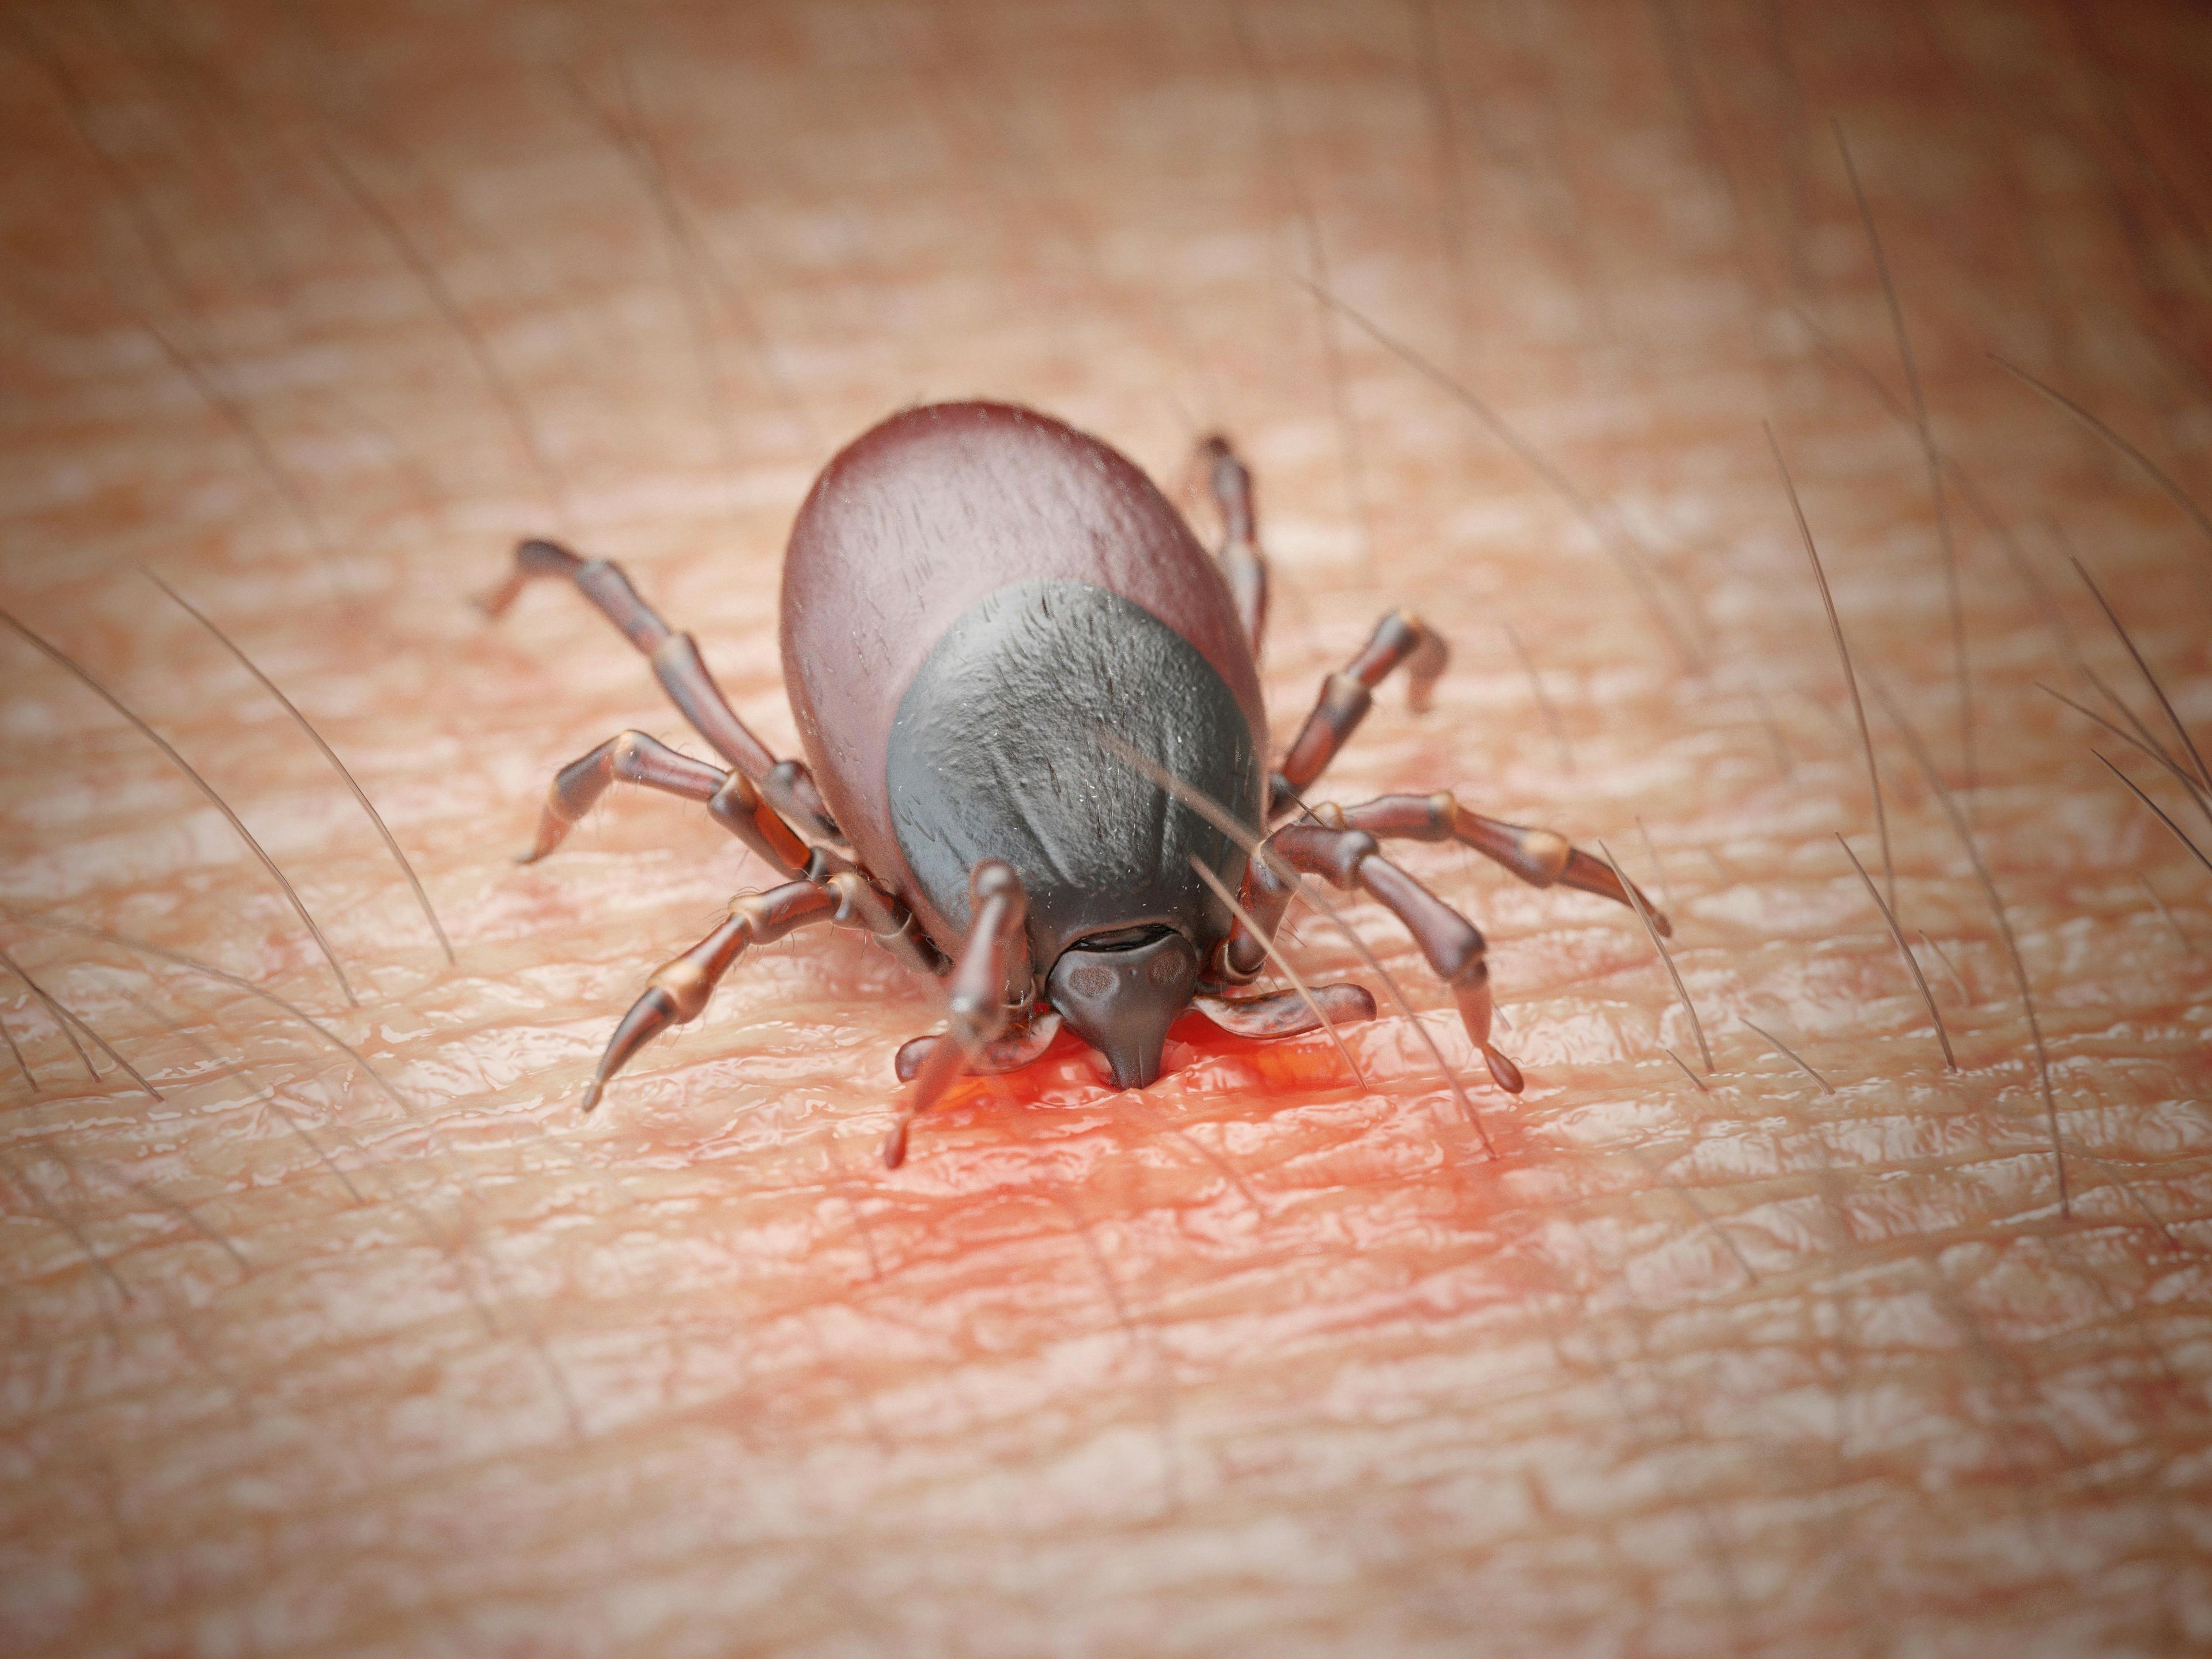 Lyme disease caused by tick bite.